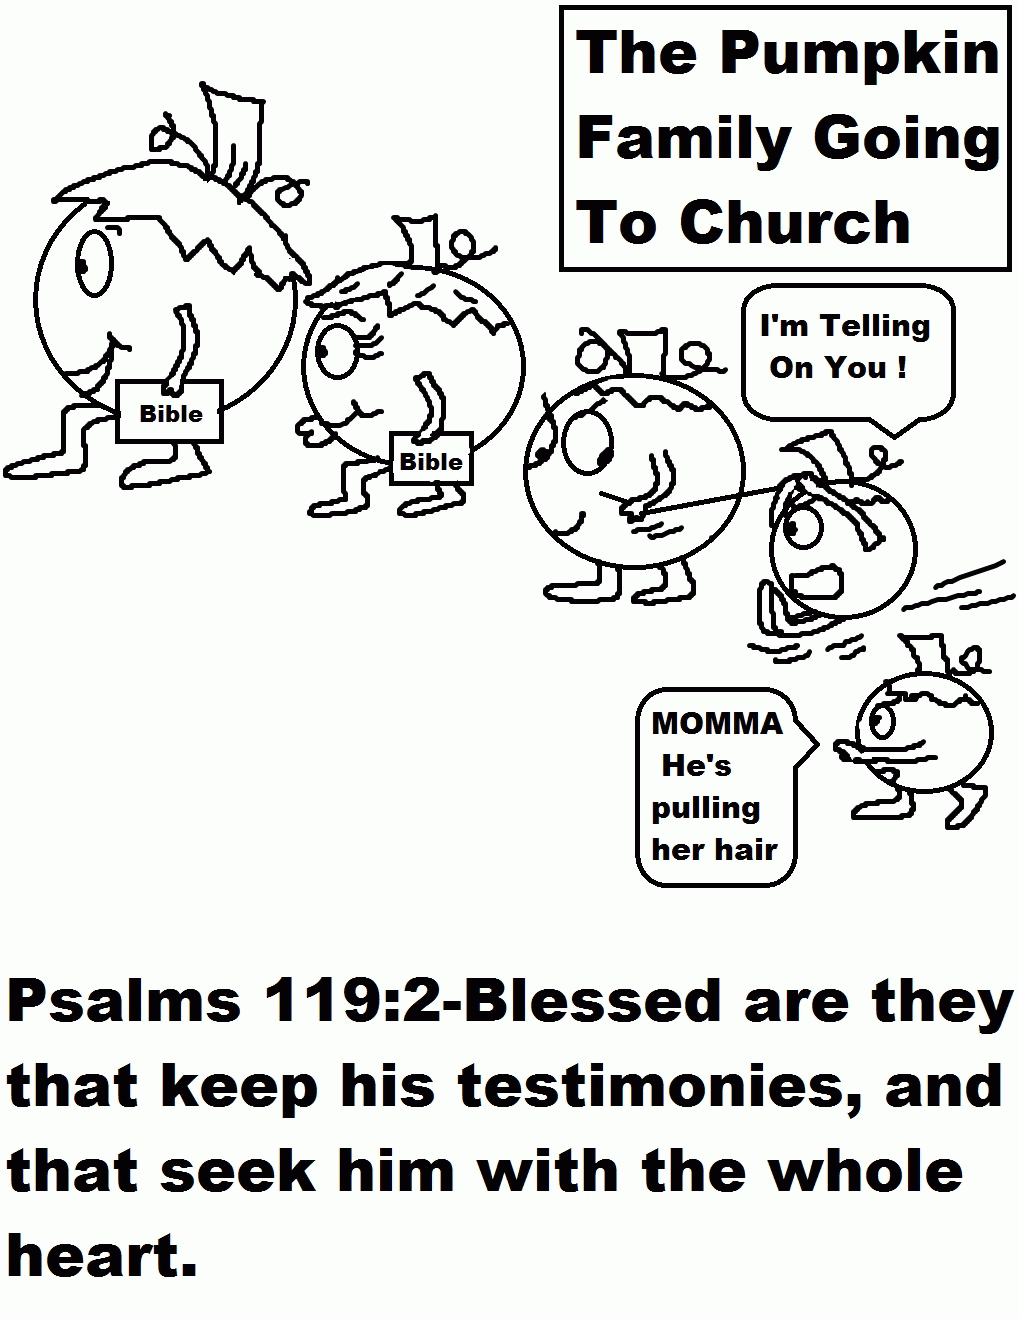 Pumpkin Family Going To Church Coloring Page.jpg (1019Ã1319 ...